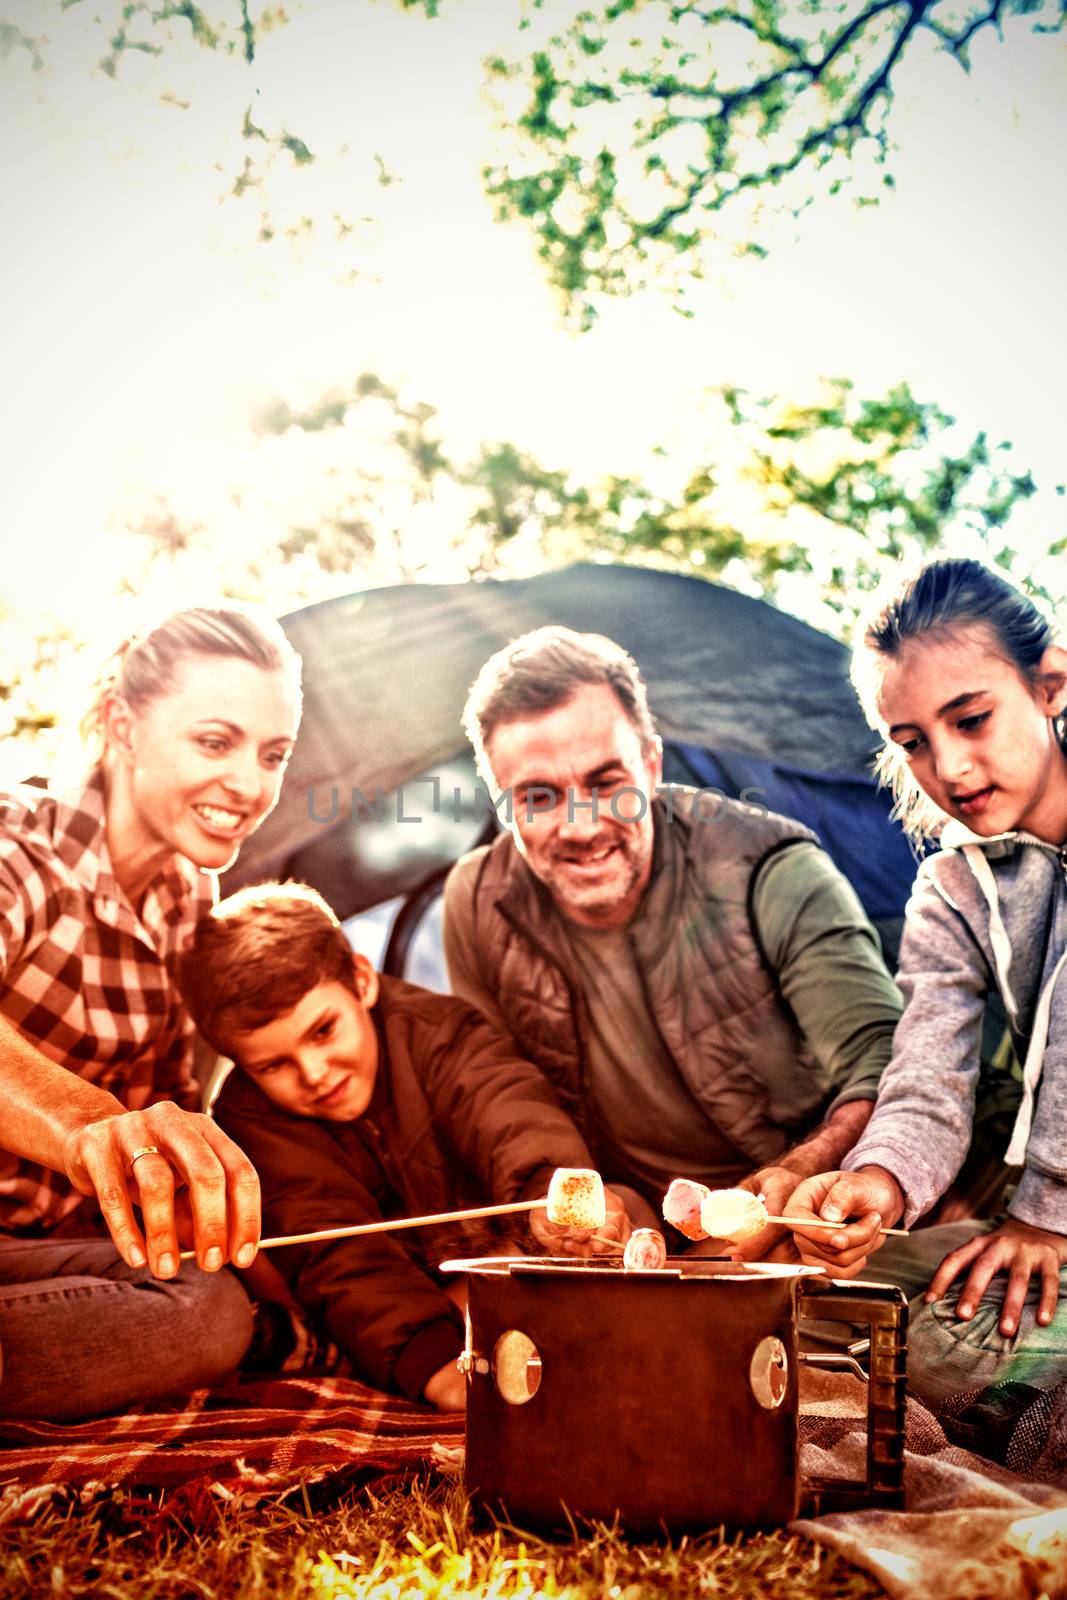 Family roasting marshmallows outside the tent by Wavebreakmedia